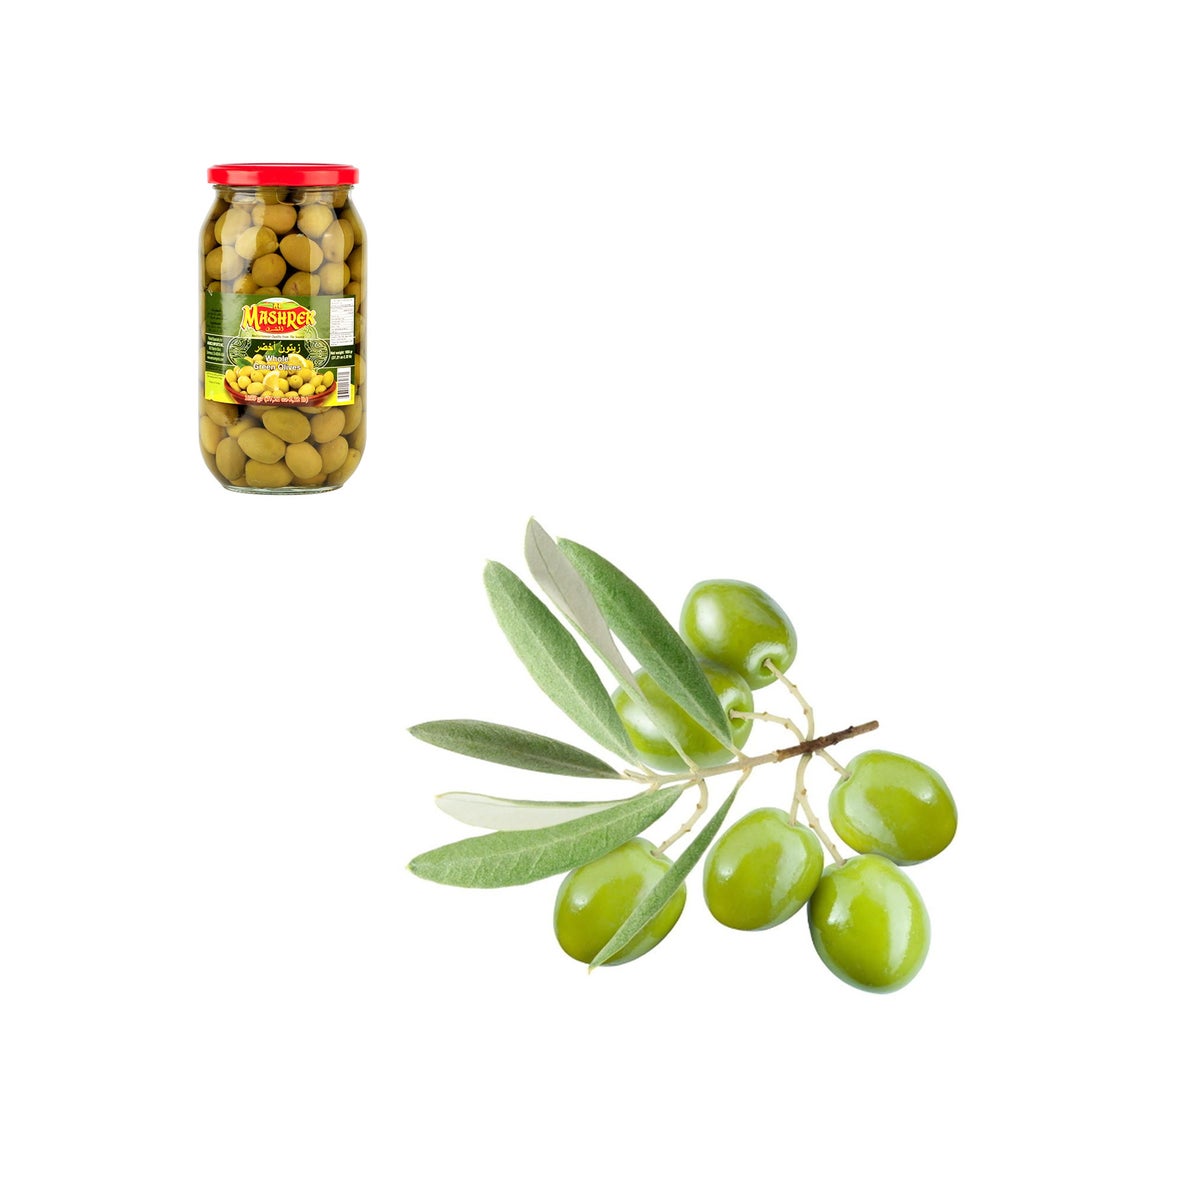 Al Mashrek Green Olives 2.32lbs 1055g                        643700170361